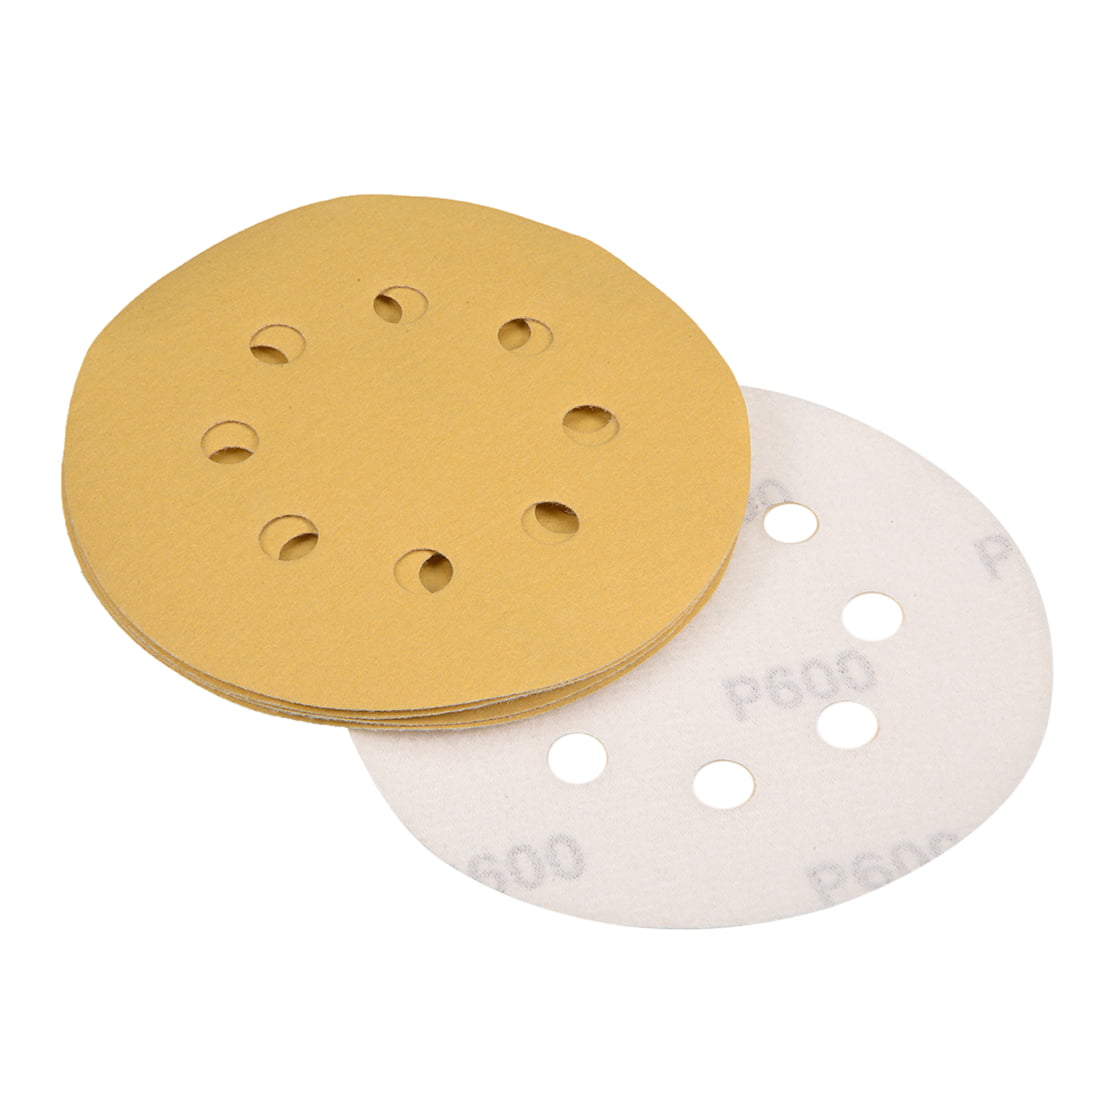 30Pcs Sanding Discs Sandpaper Assorted Grits Hook Loop_for Orbital Sander 5"